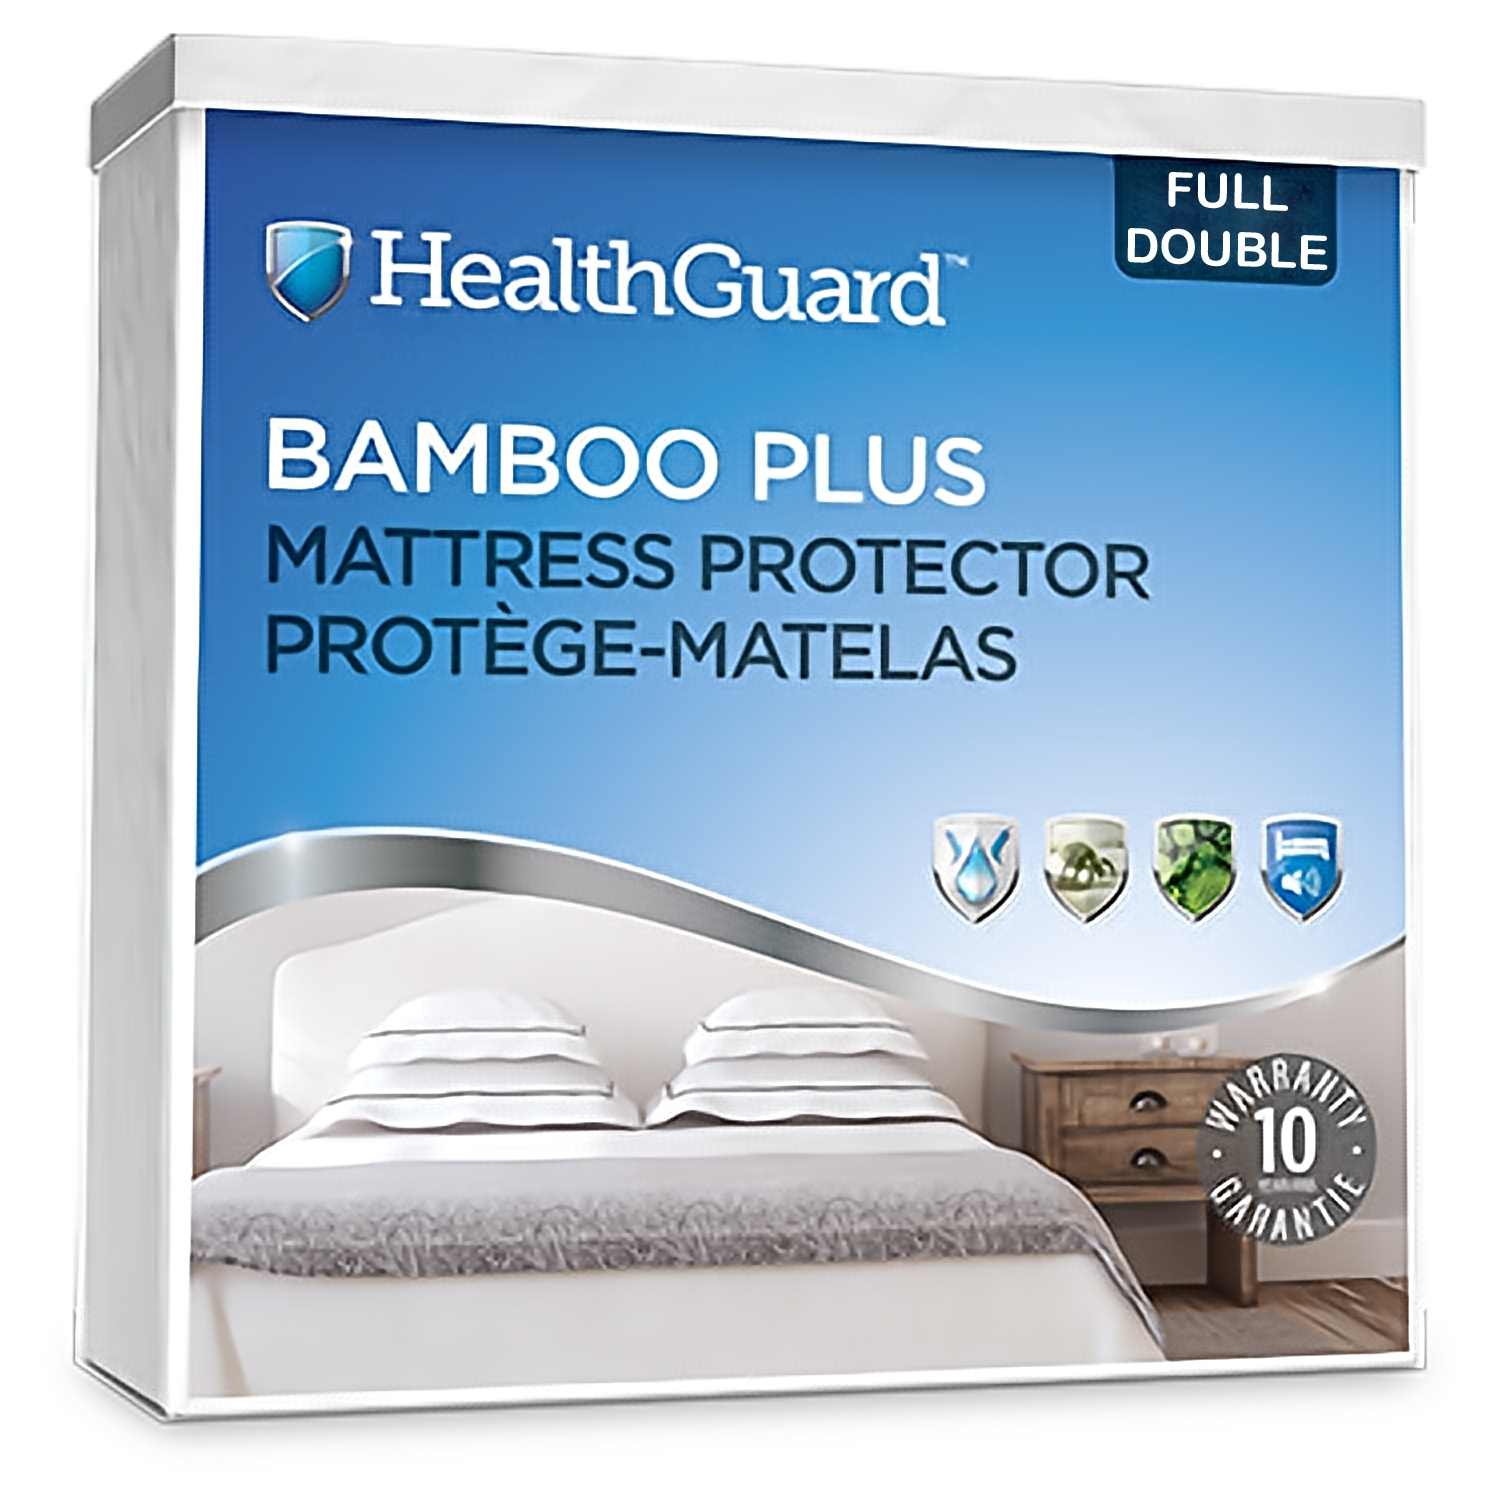 Health Guard Bamboo Plus Mattress Protector - Double / Full